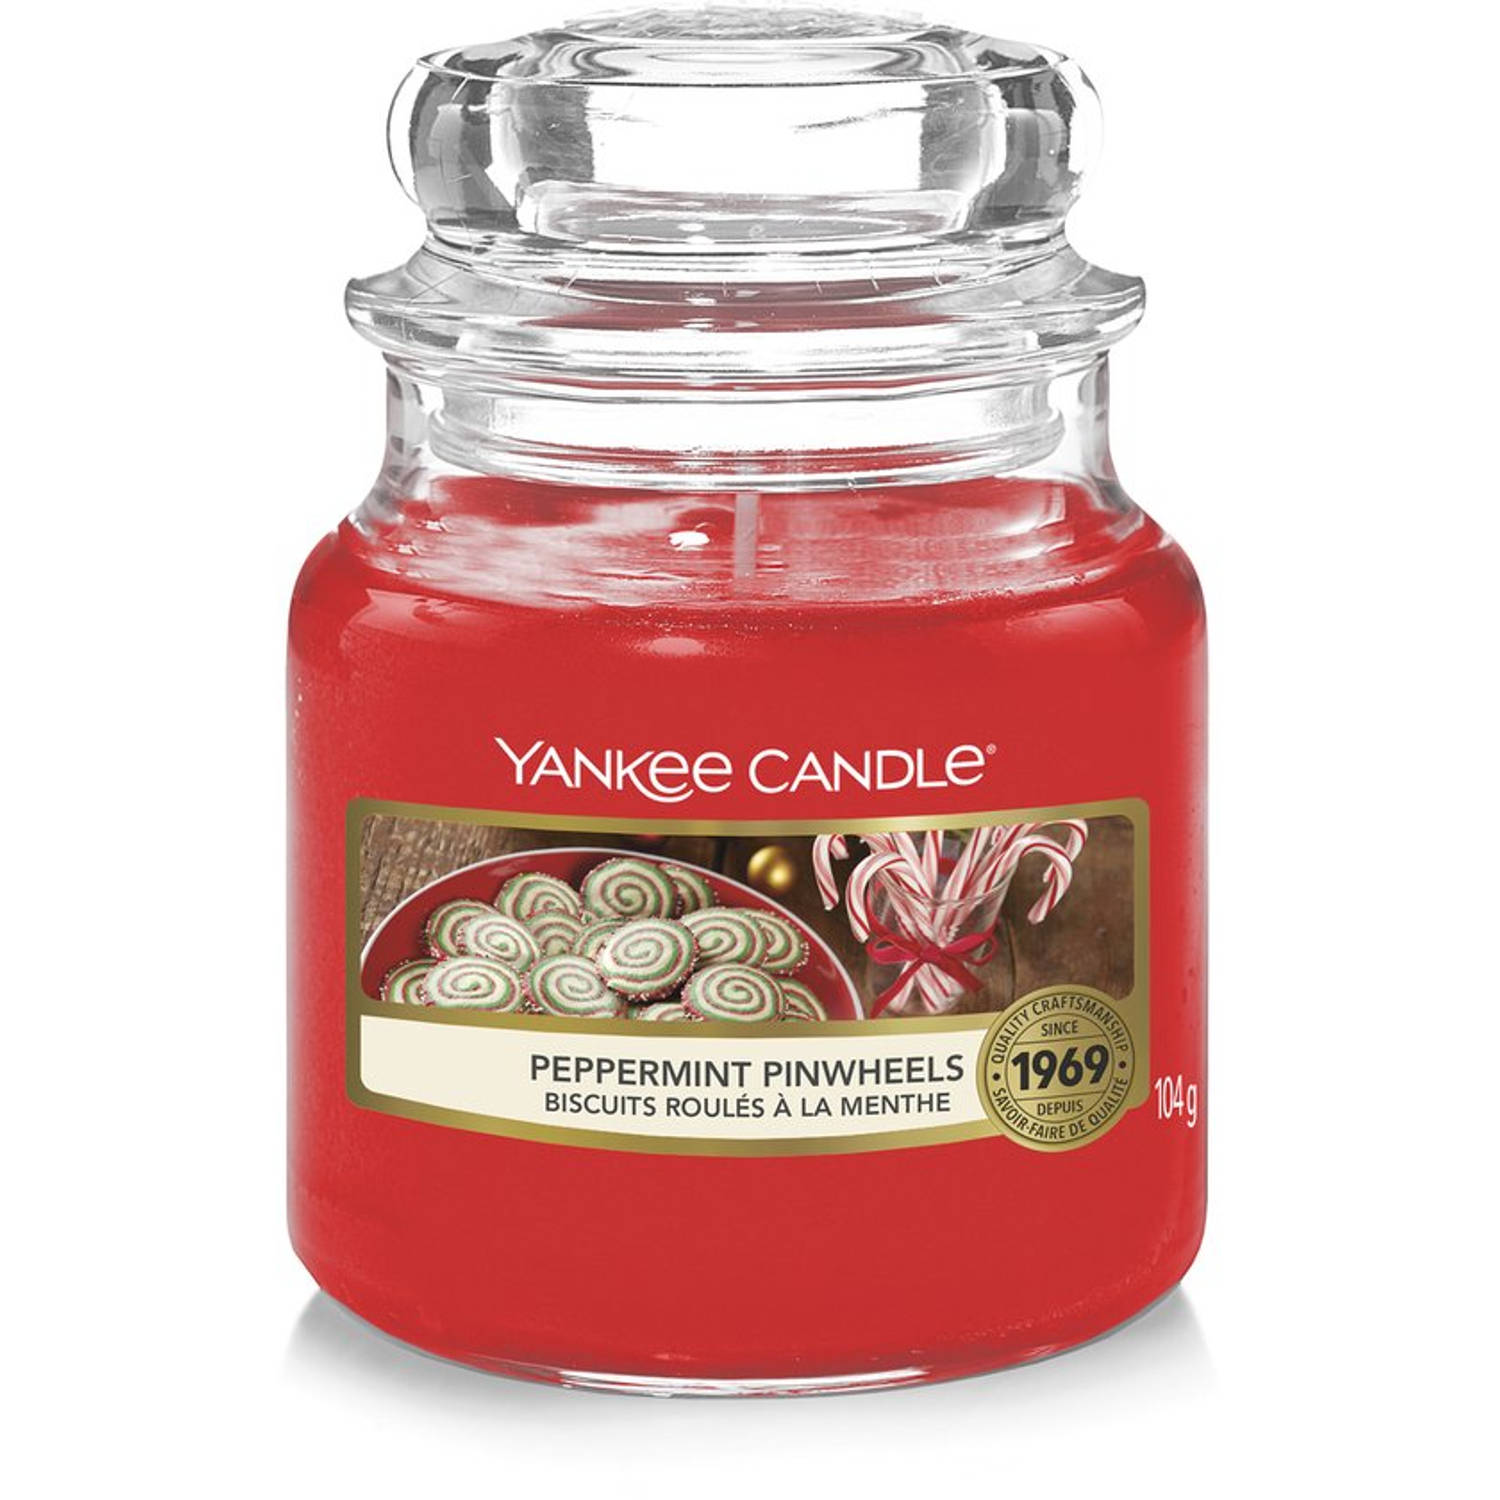 Yankee Candle - Peppermint Pinwheels Small Jar